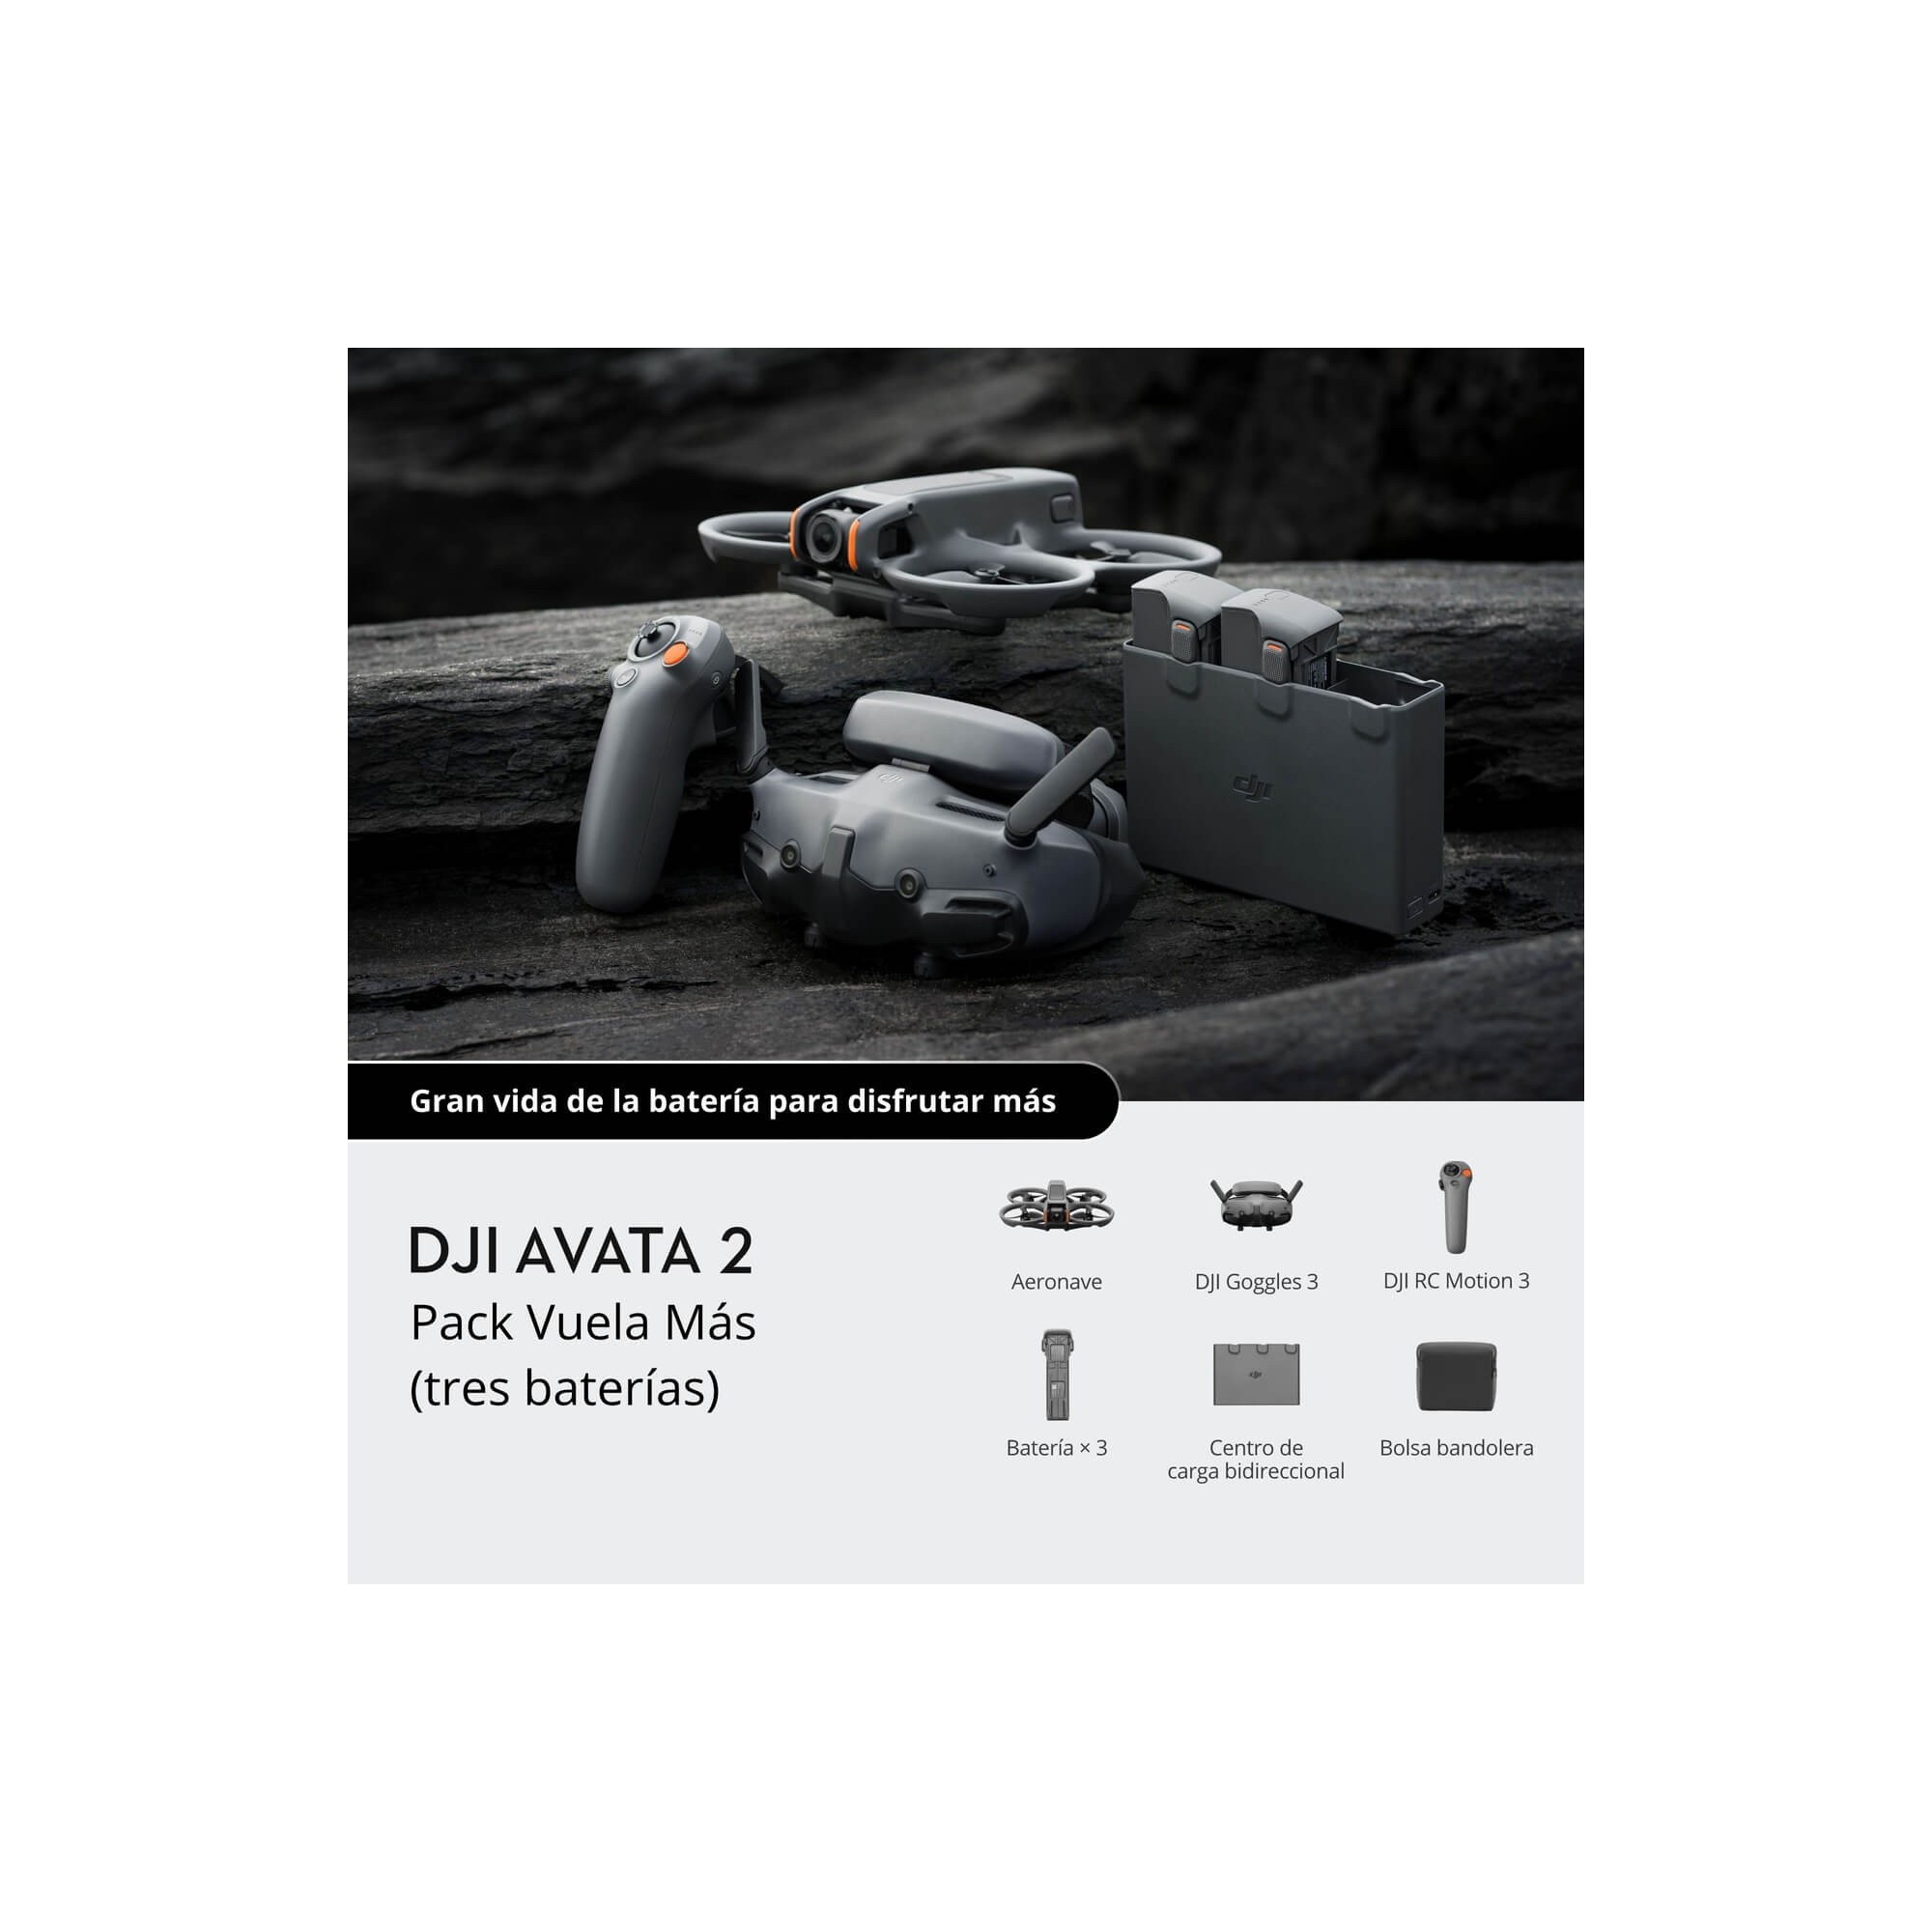 Pack DJI Avata 2 vuela más tres baterías